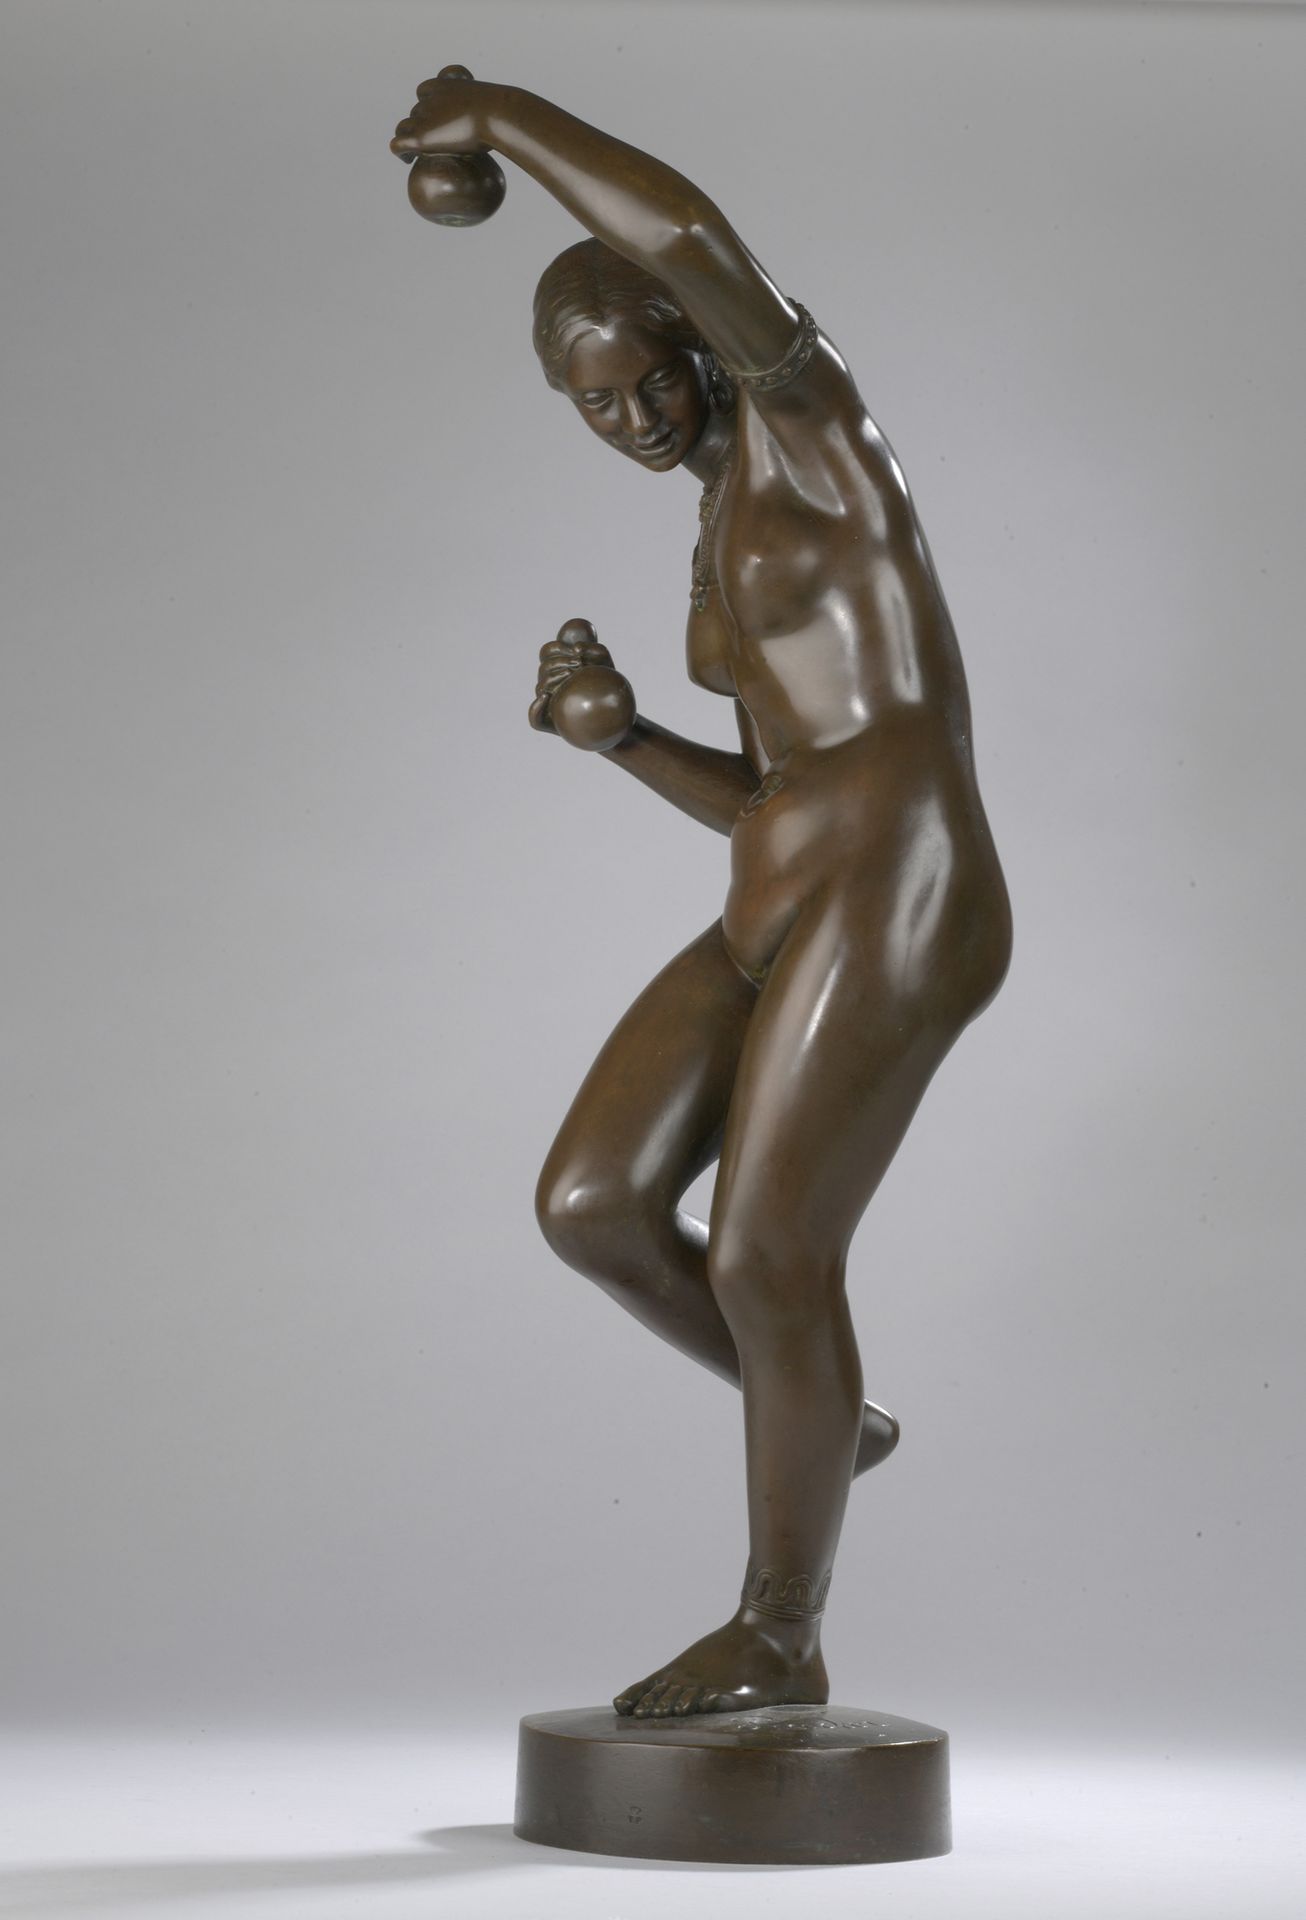 Null 詹姆斯-普拉德尔 (1790-1852)

裸体舞者与卡拉布什

模型创建于1837年。

青铜，带有浅棕色的铜锈。

在露台上签名的普拉蒂尔。

H&hellip;